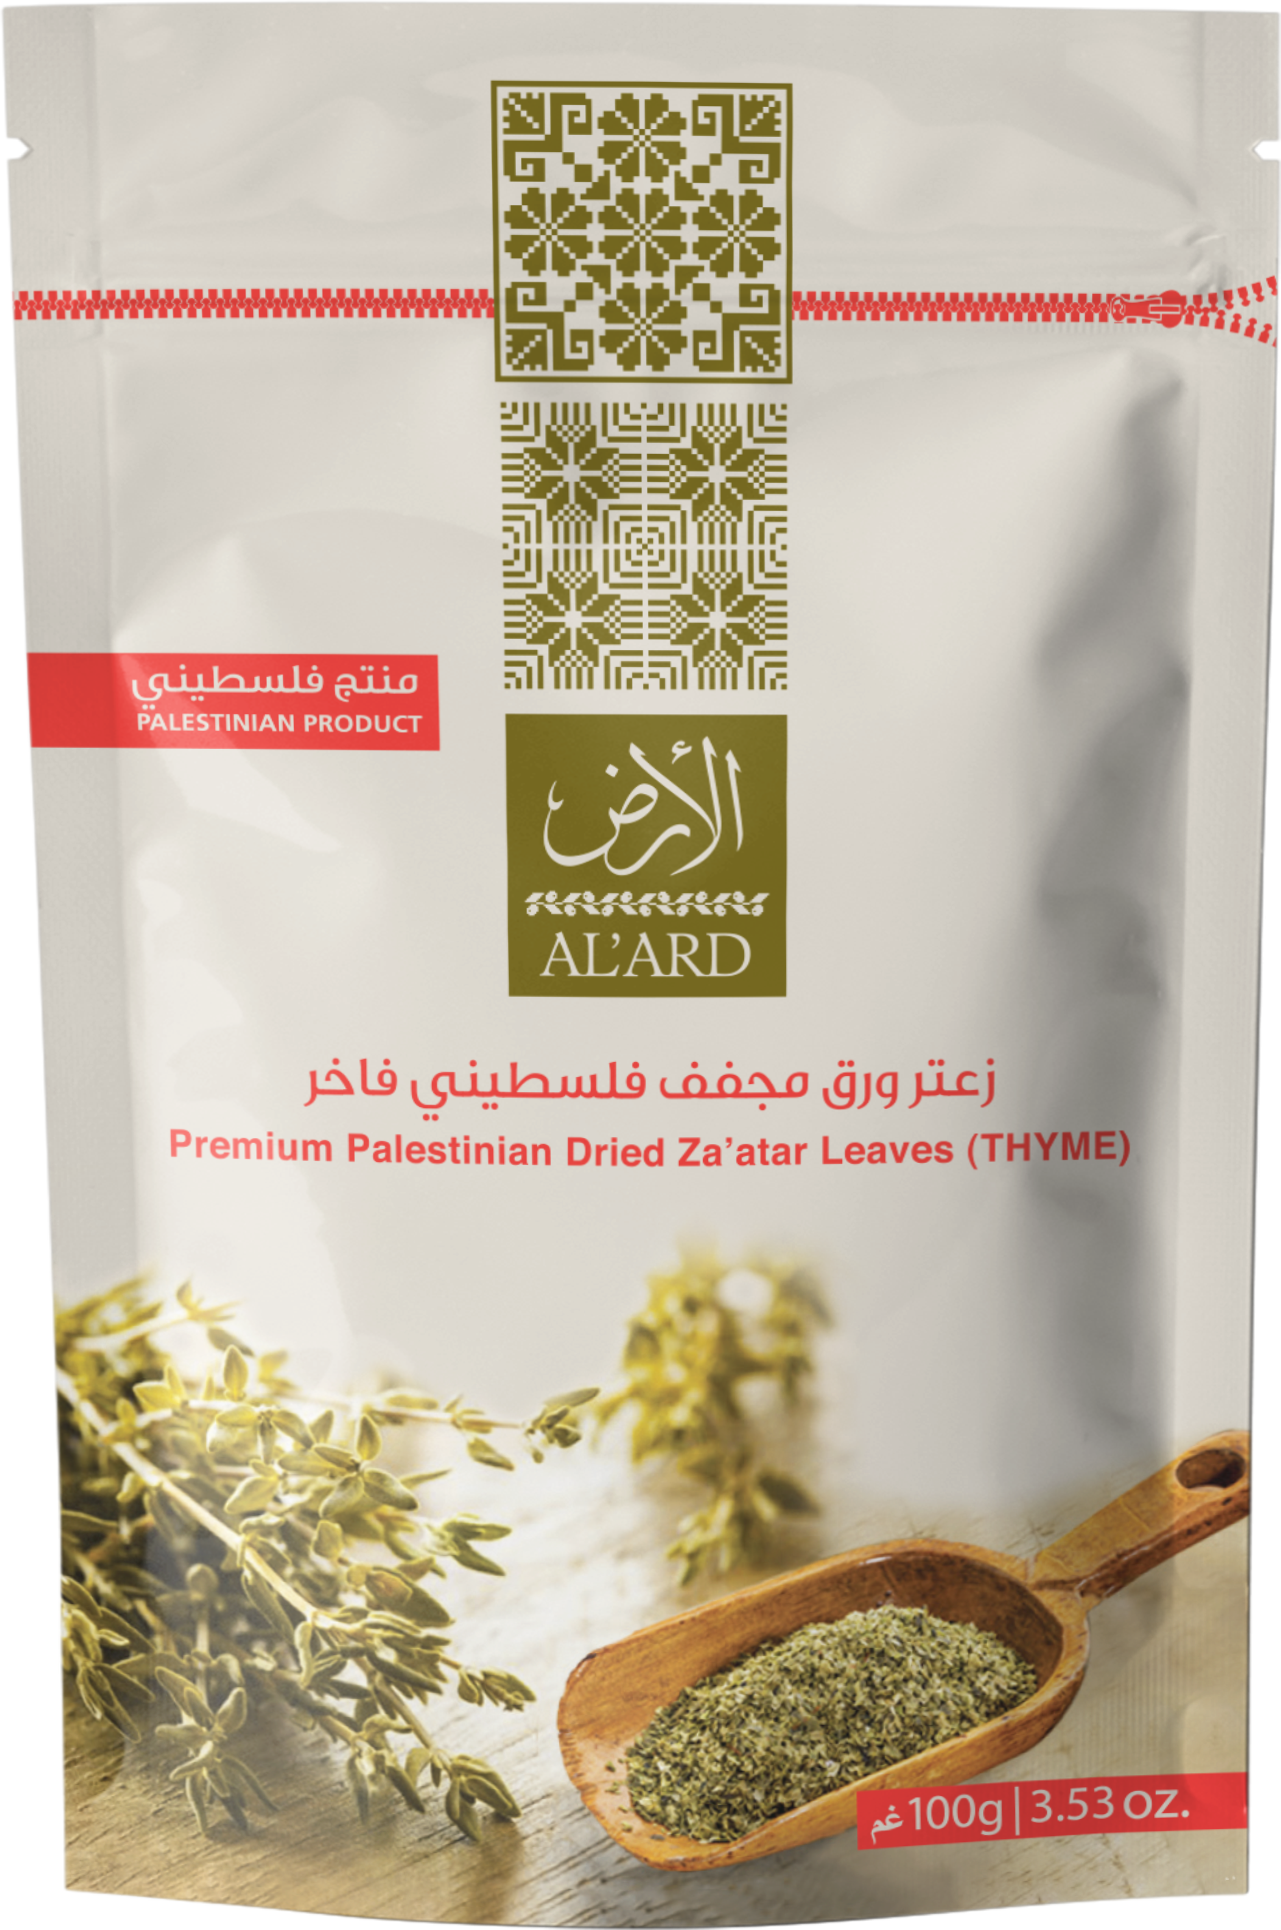 Premium Palestinian Dried Za'atar Leaves (THYME) - 100g/3.53oz